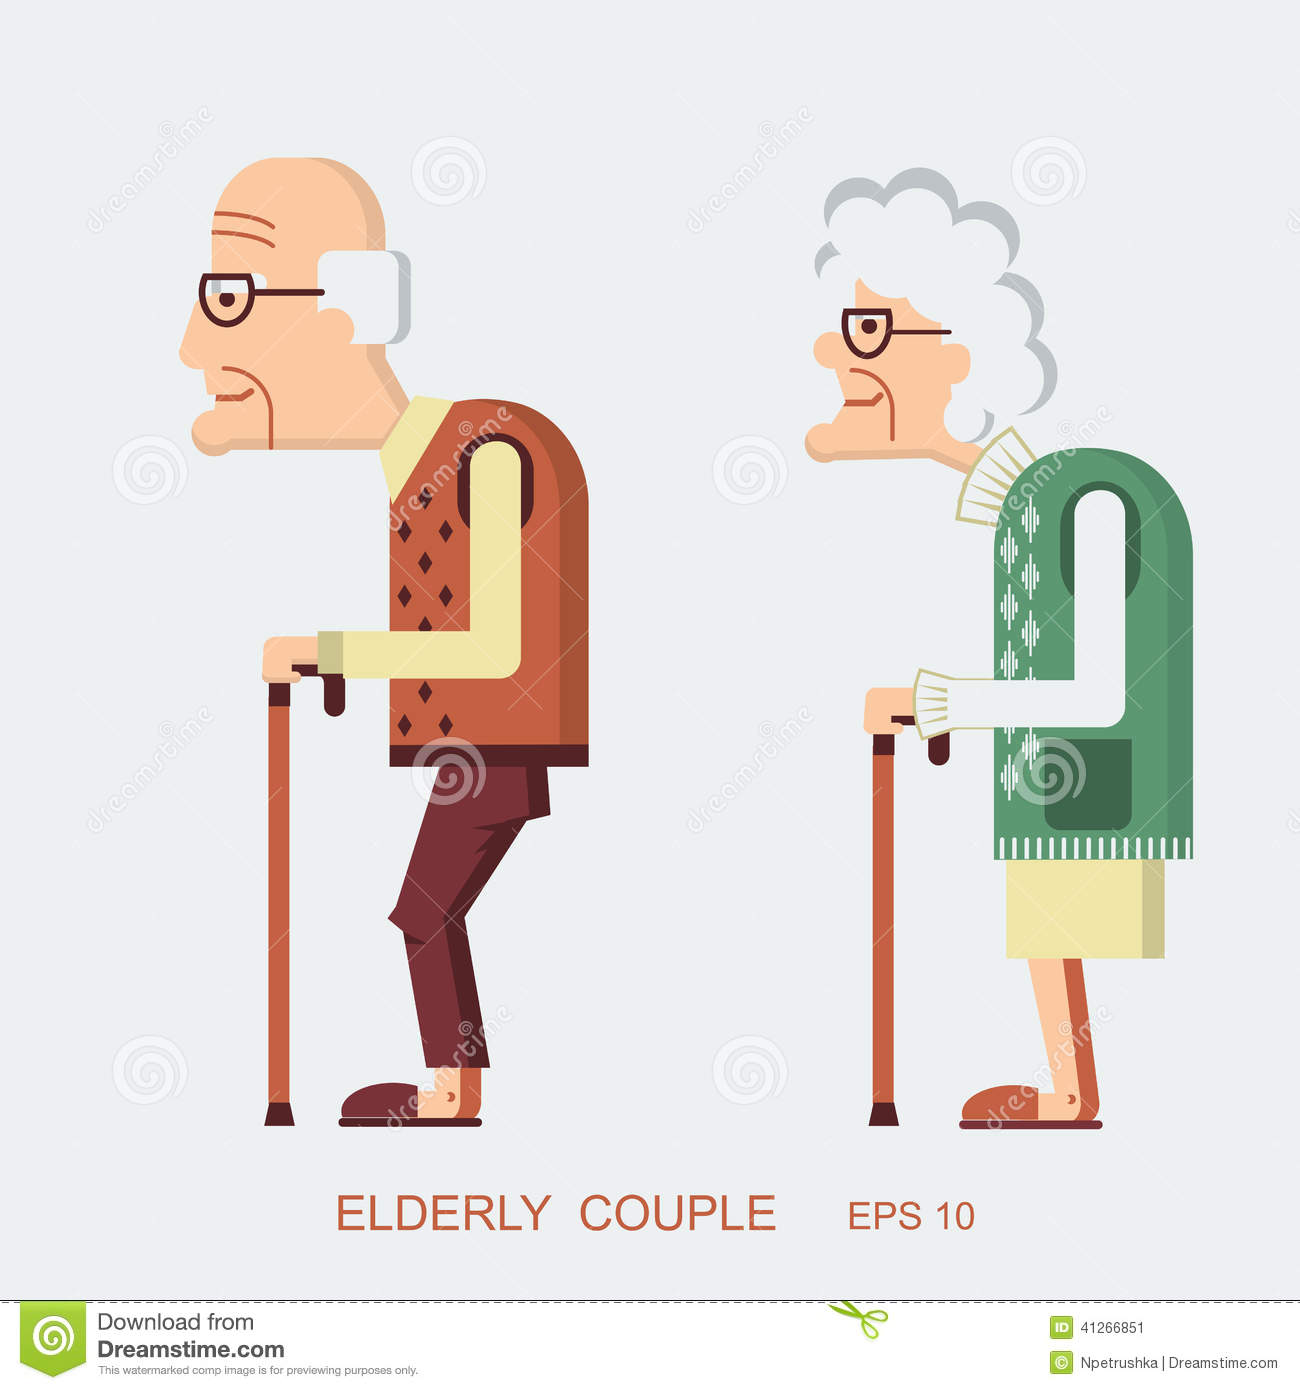 clipart elderly care - photo #23